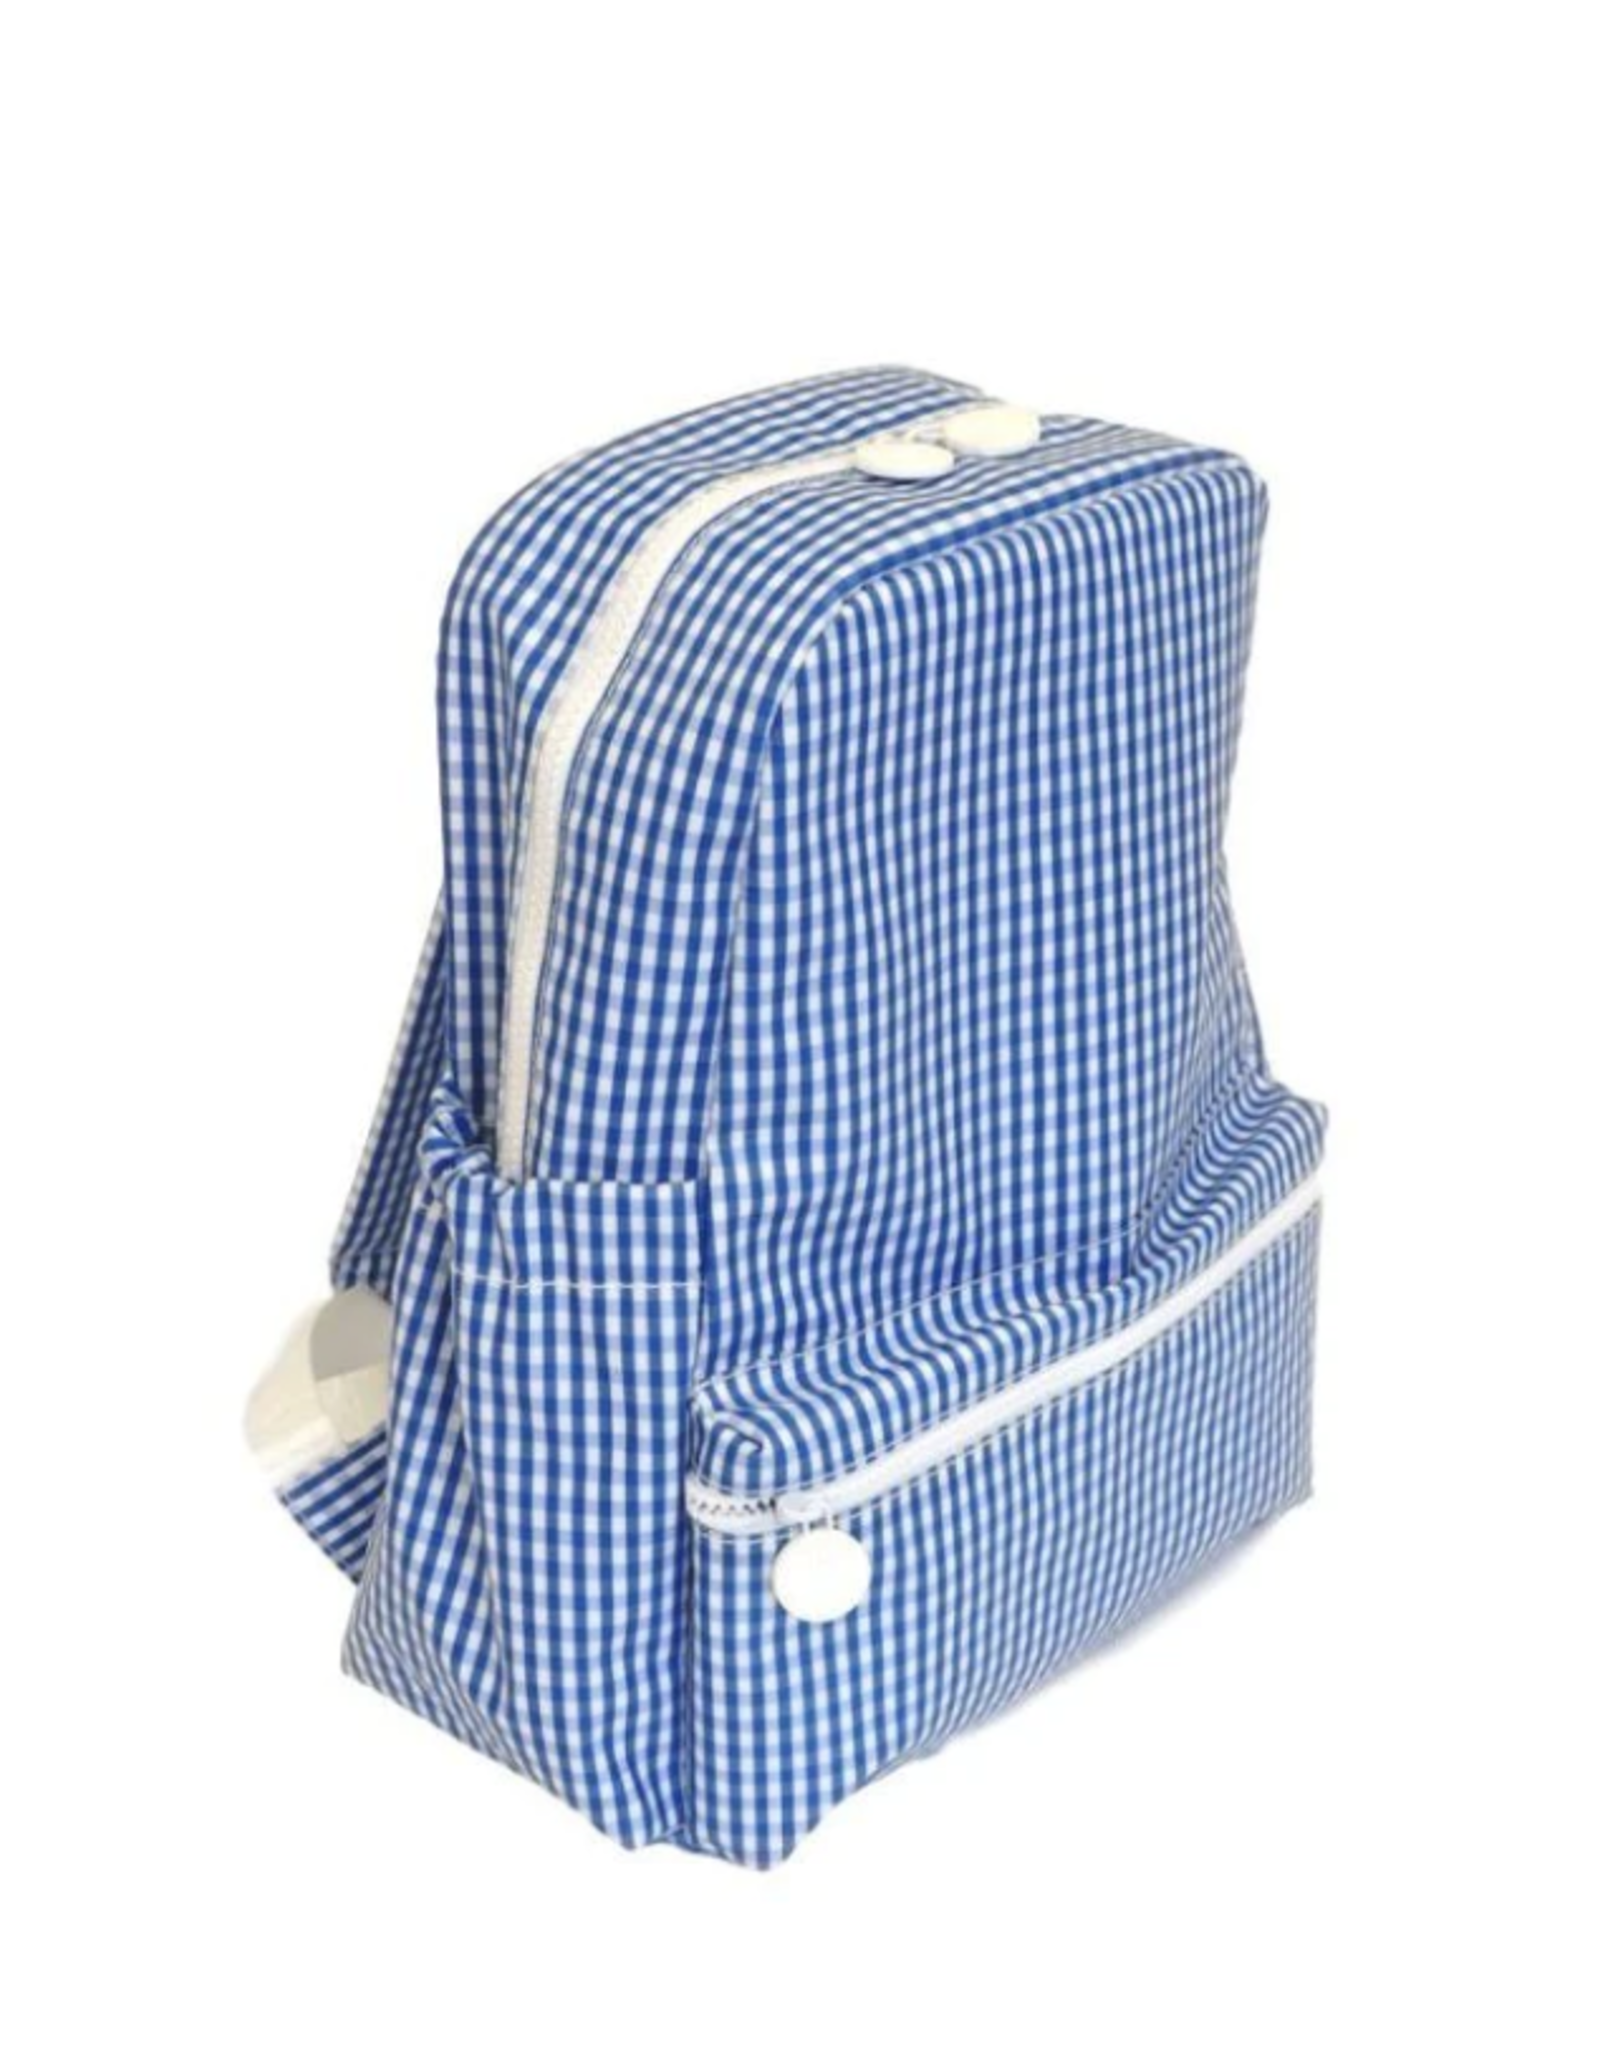 TRVL Design TRVL Backpacker Backpack